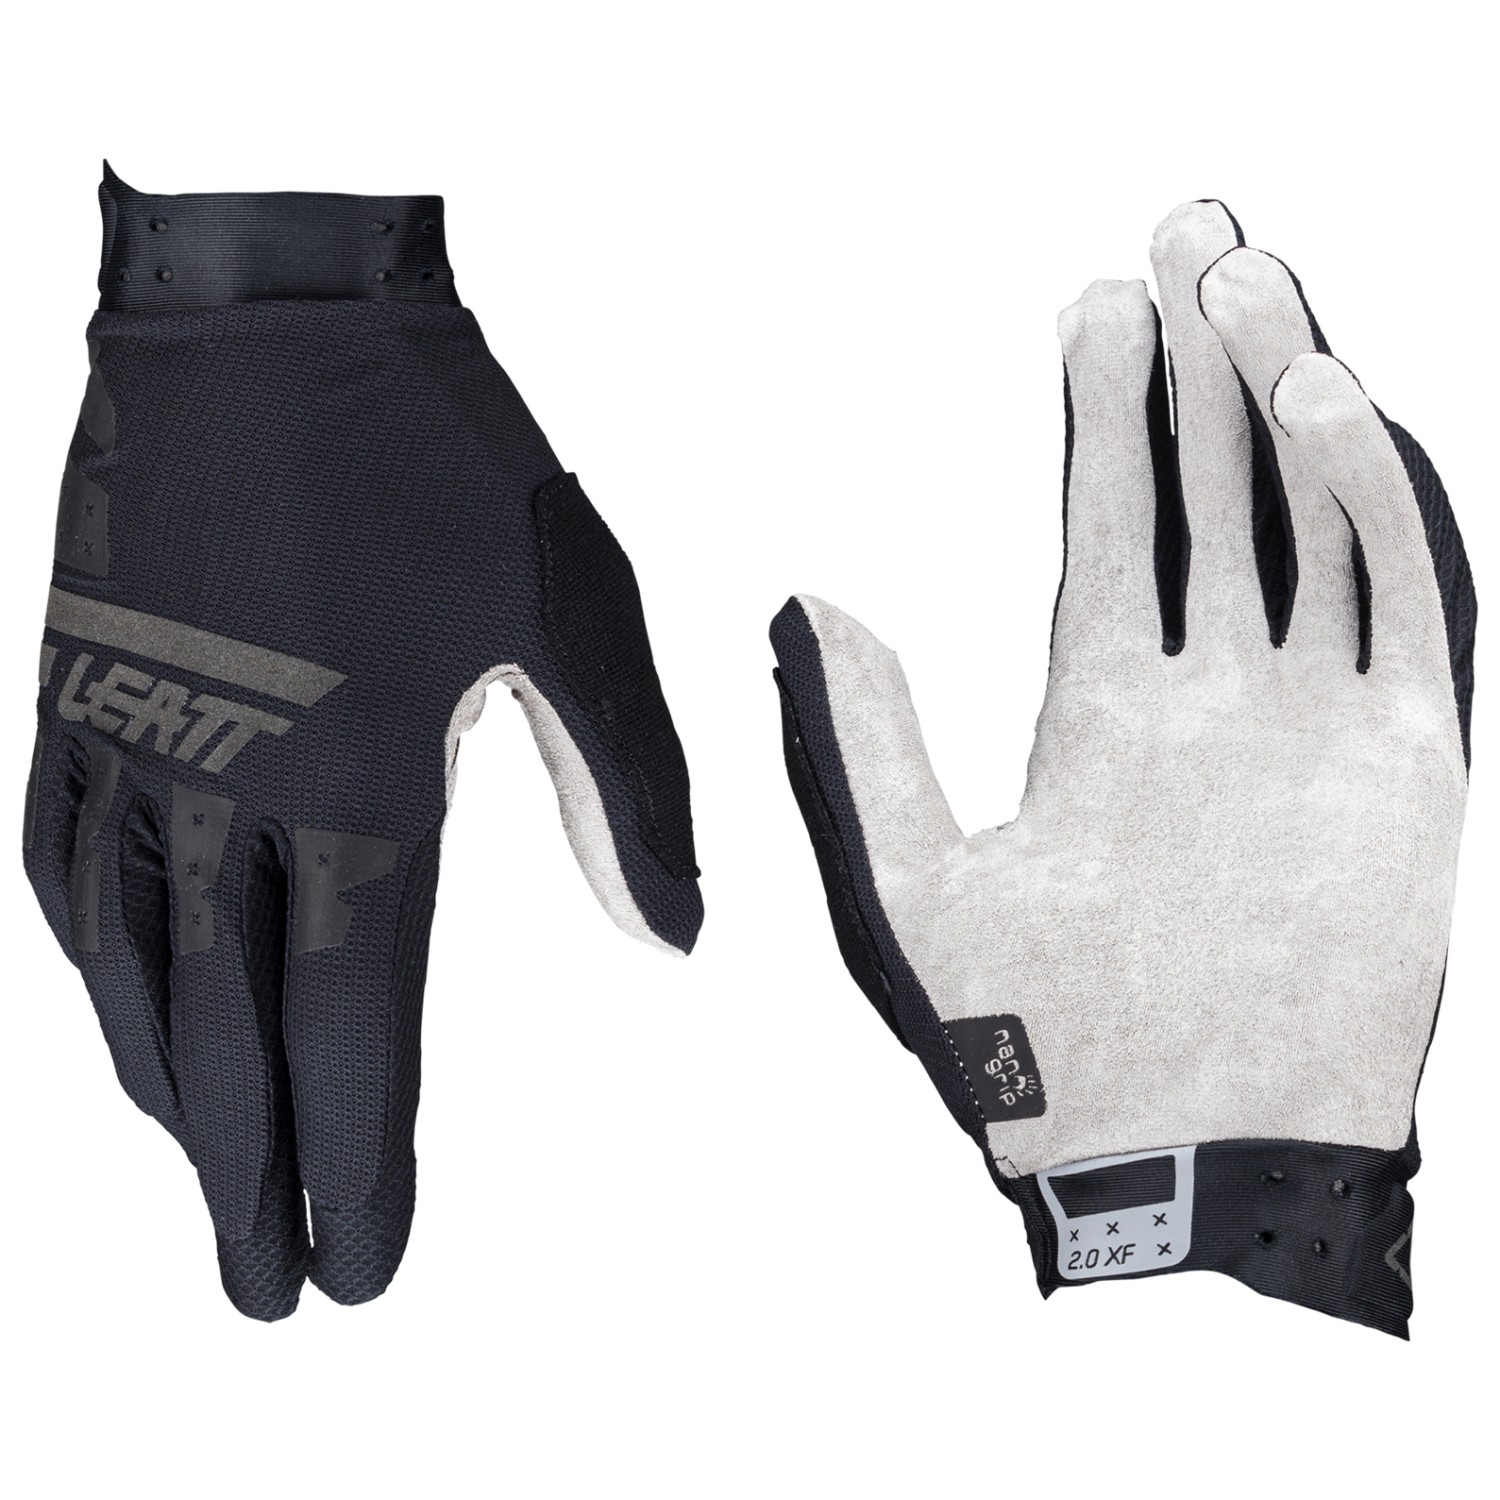 Перчатки Leatt Glove MTB 2 0 X Flow, цвет Stealth 2 5 контрастные перчатки x flow для мотокросса leatt белый фиолетовый